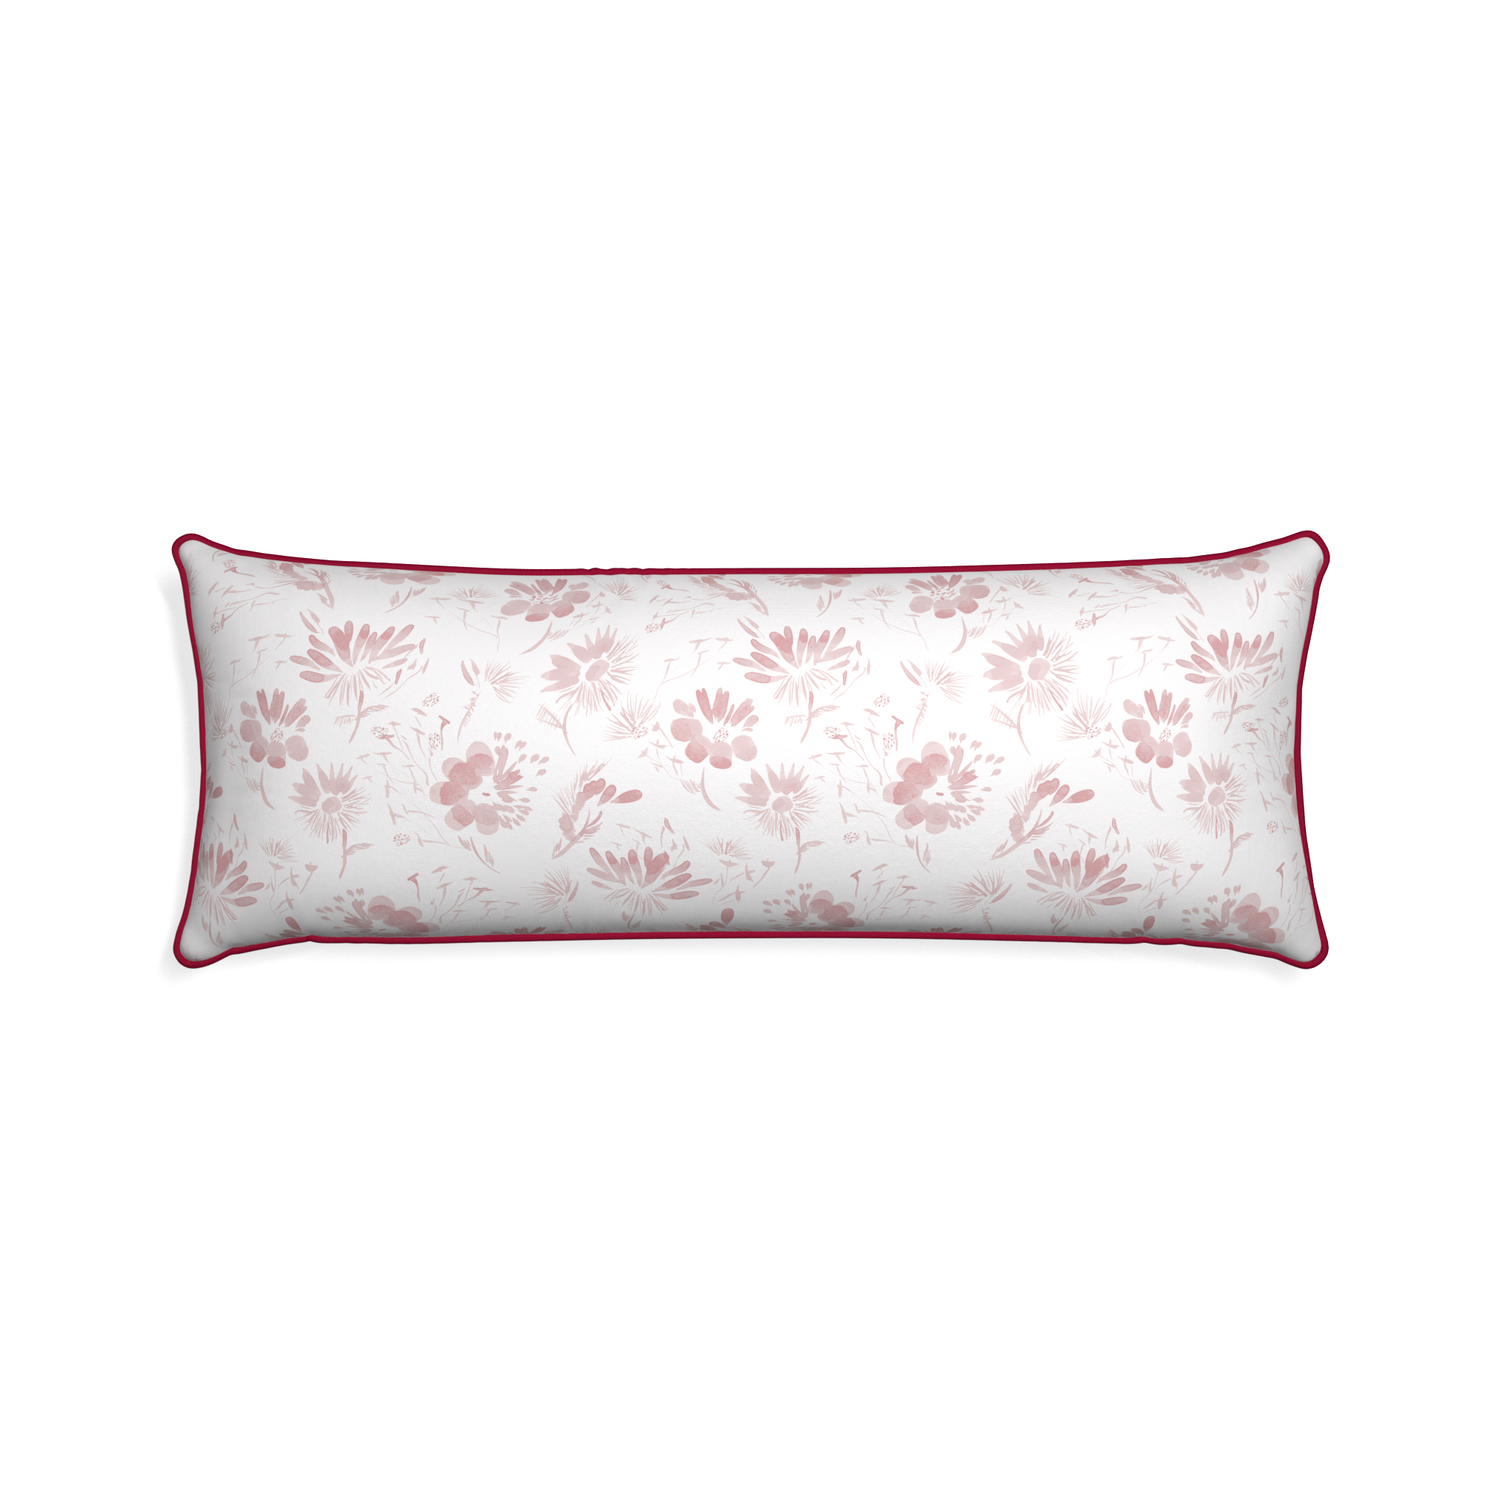 Xl-lumbar blake custom pillow with raspberry piping on white background